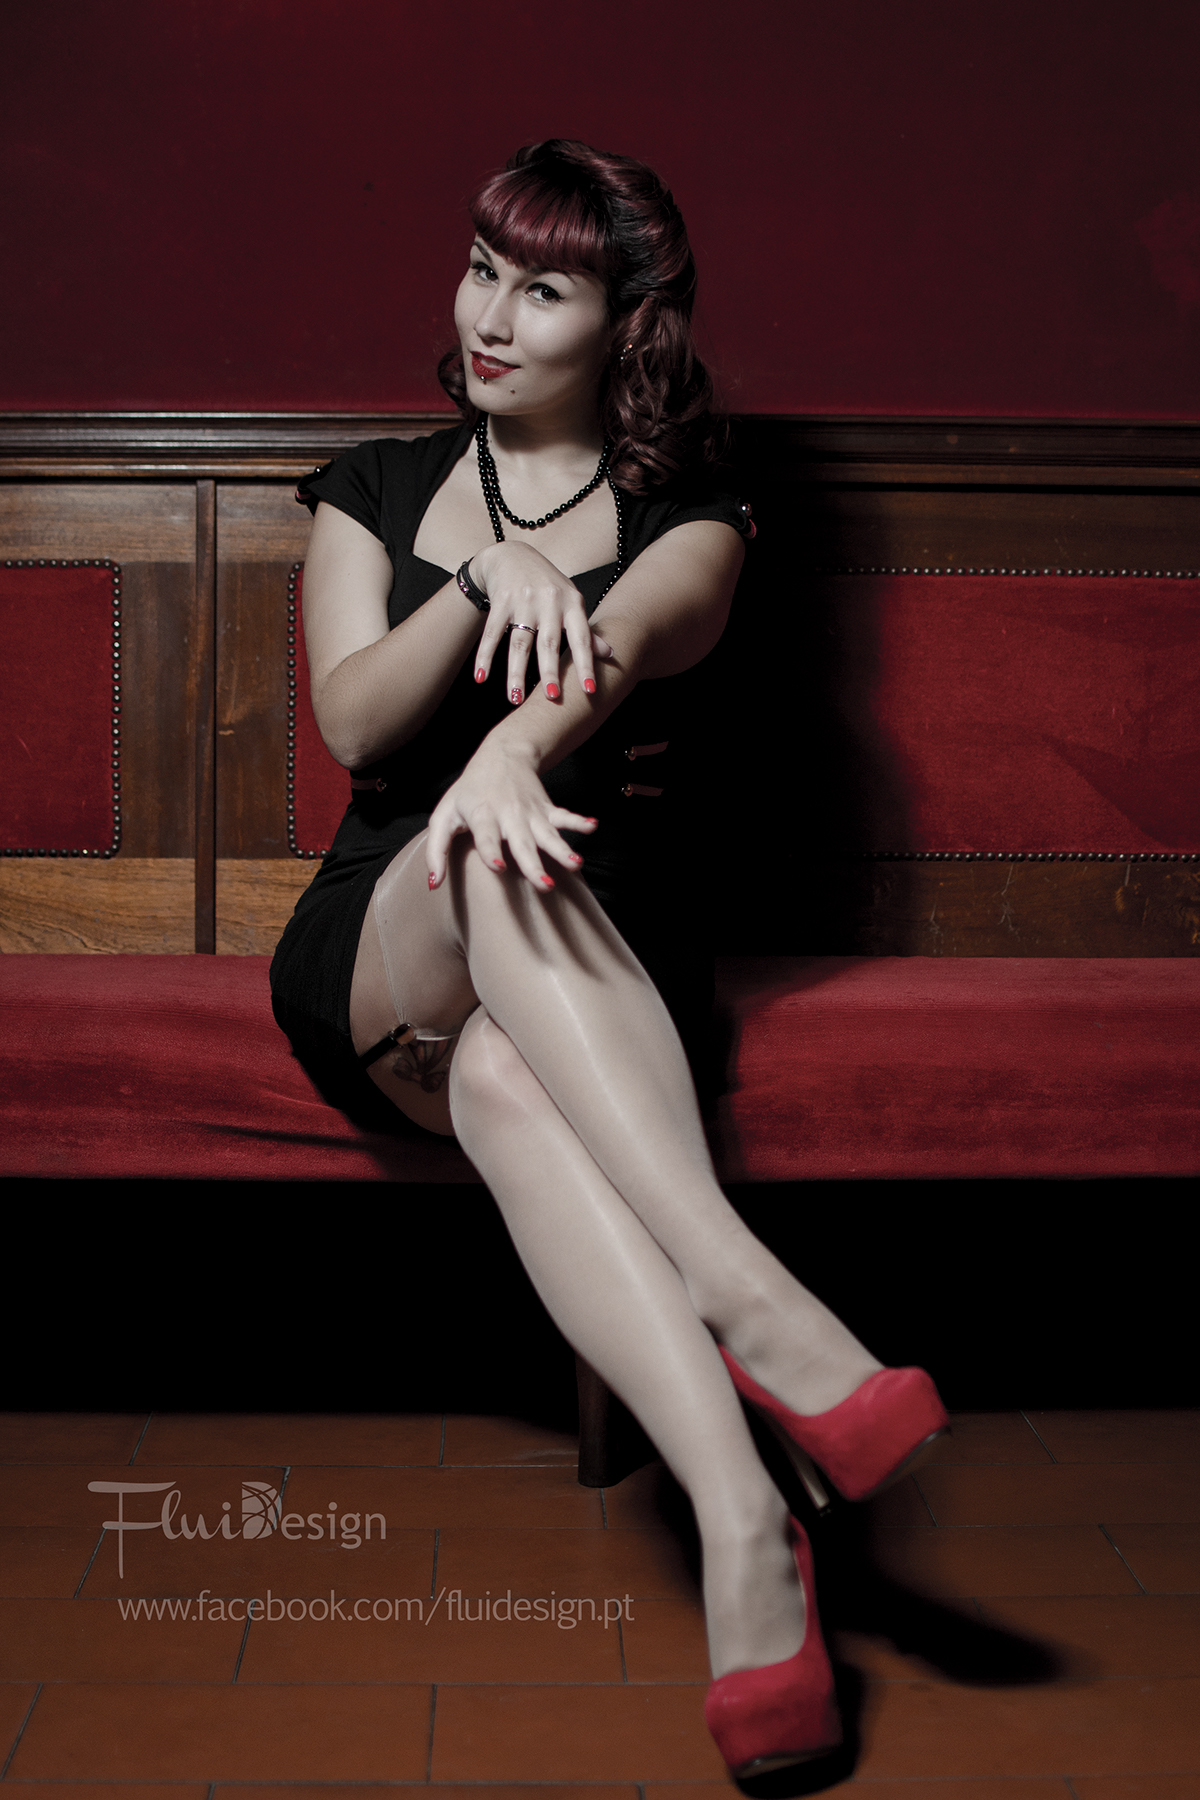 vintage pinup girl legs red hair alternative tattoos pierciengs velvet lingerie high heels red shoes bar